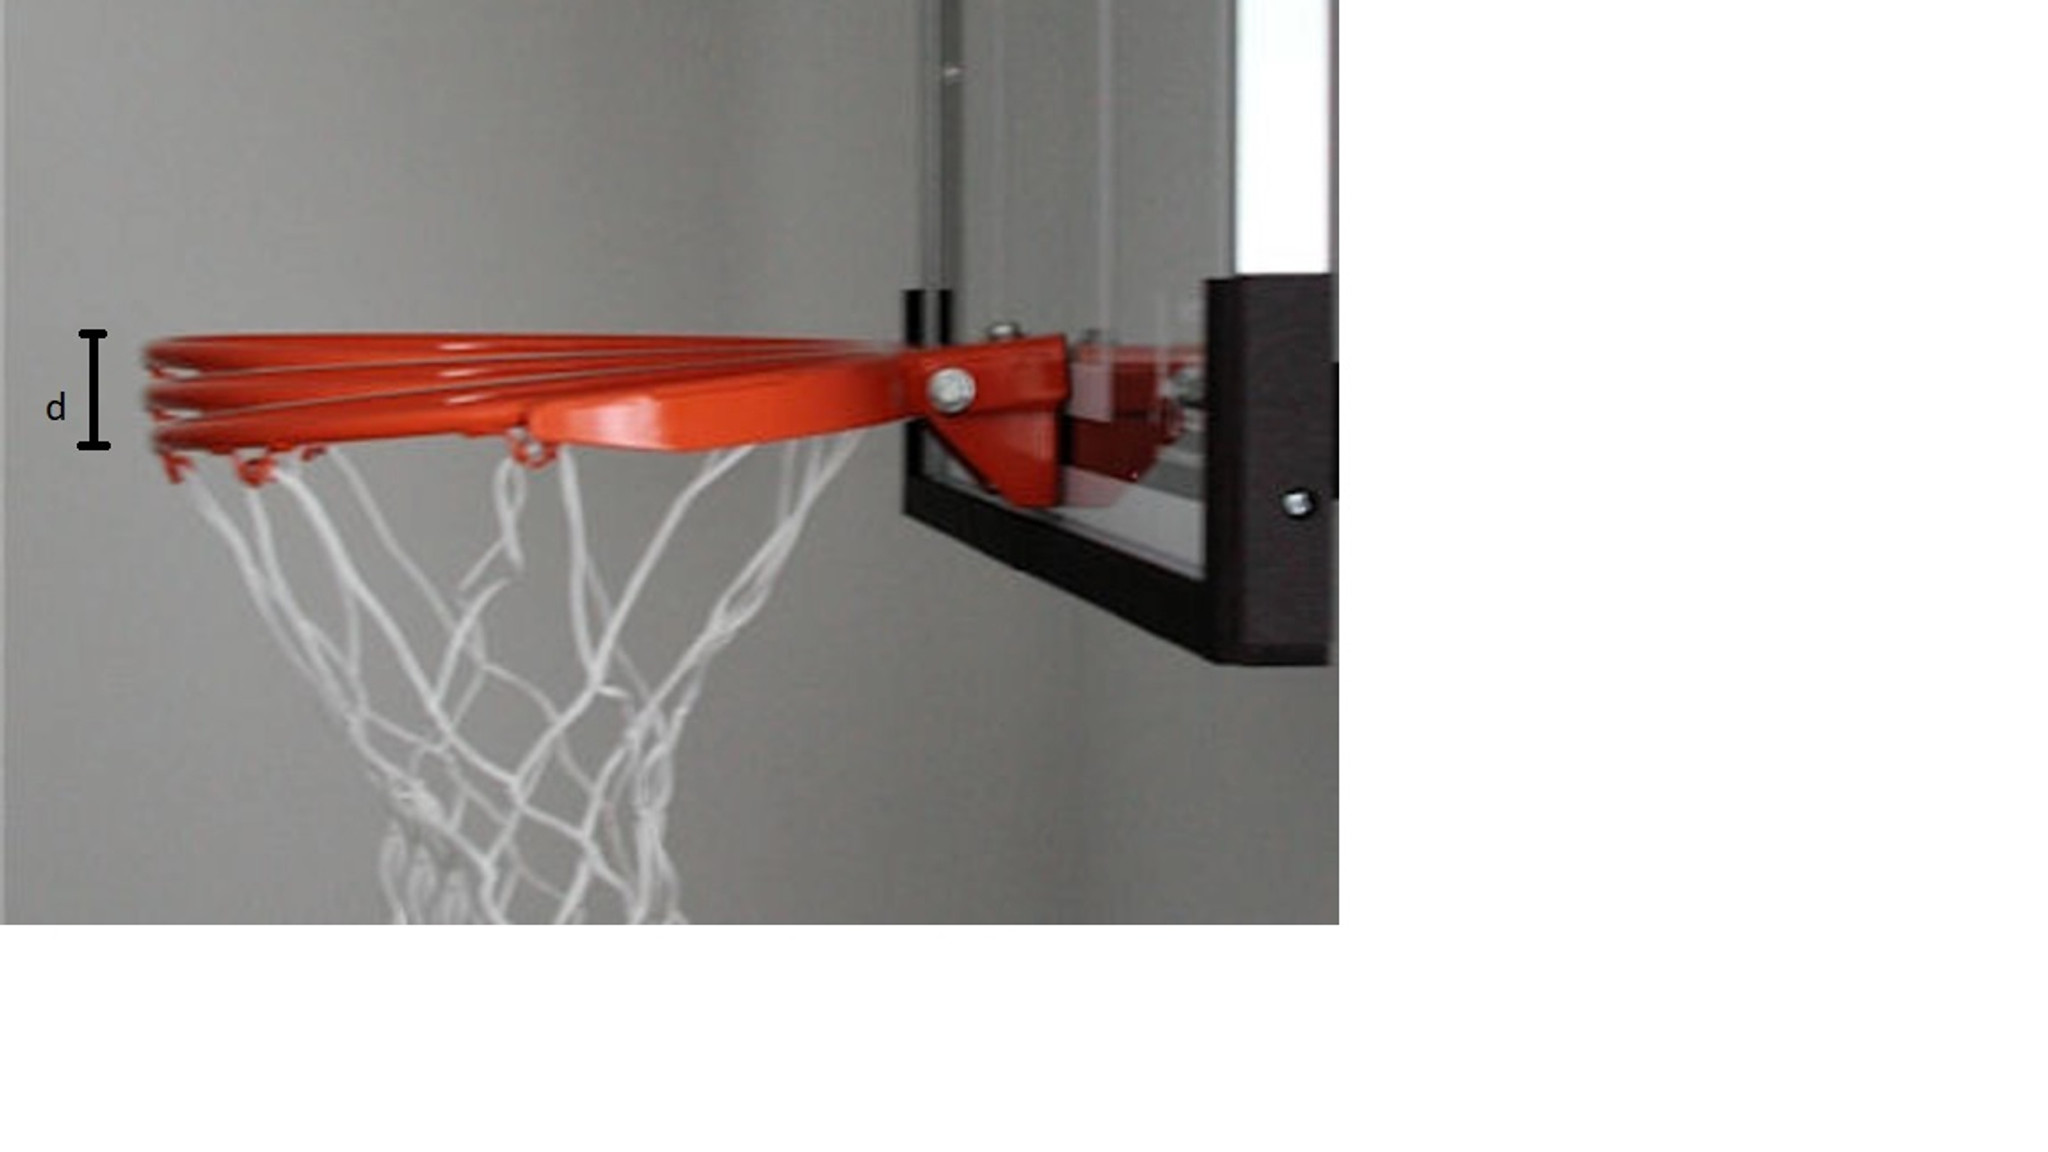 Mini Pro Ultimate Basketball Hoop Set